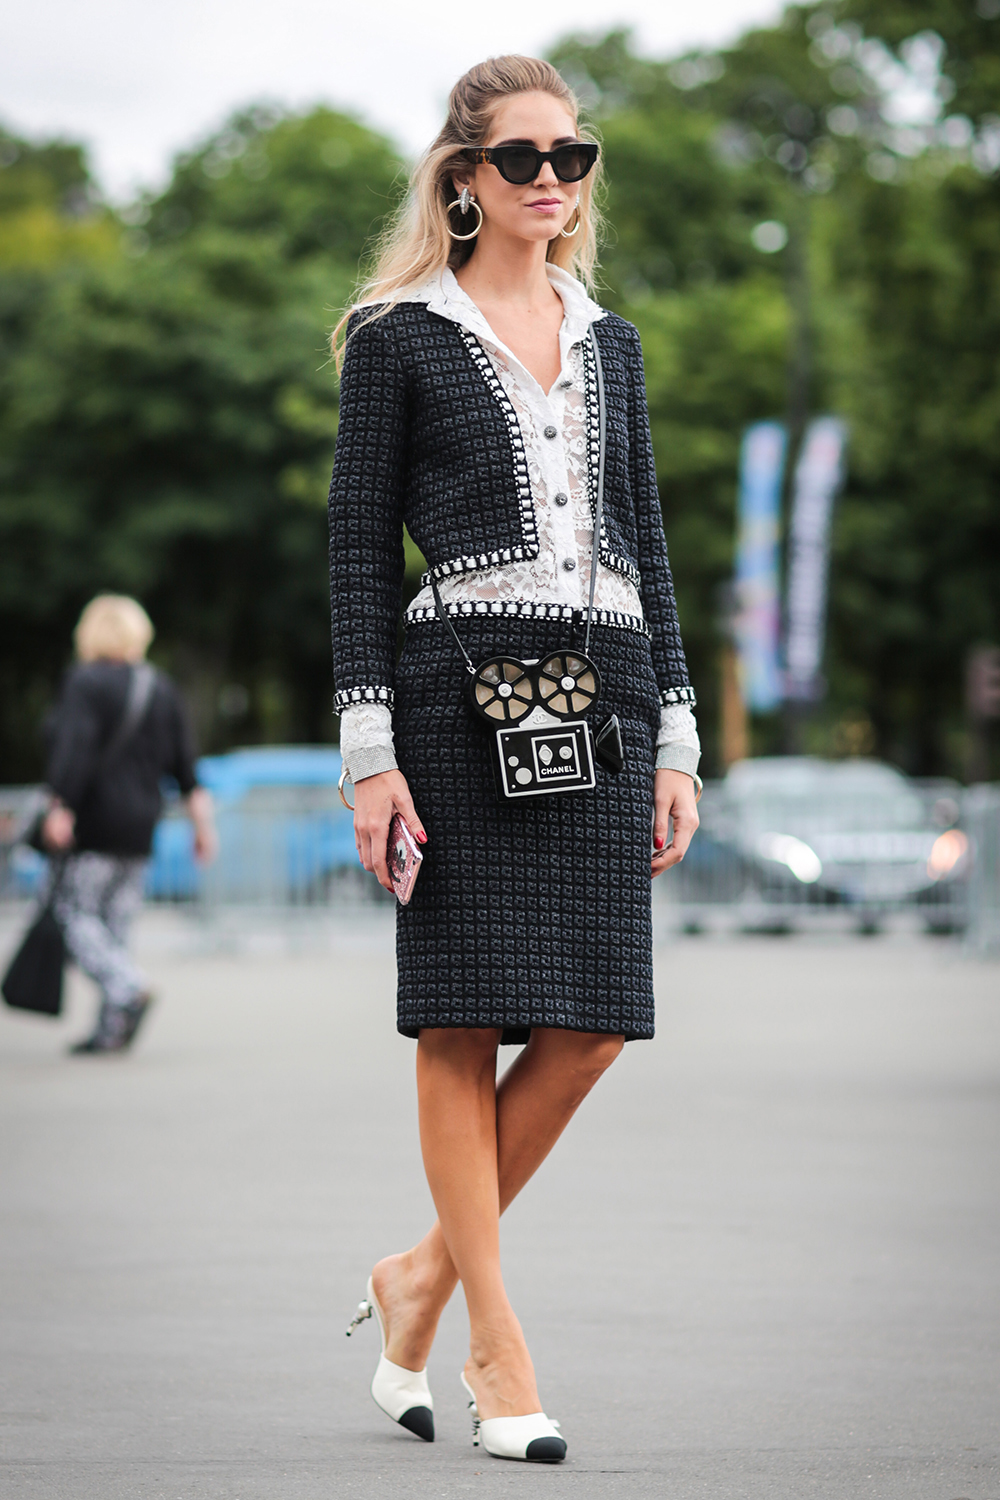 Chiara Ferragni outside the Chanel show, during Paris Fashion Week Haute Couture.